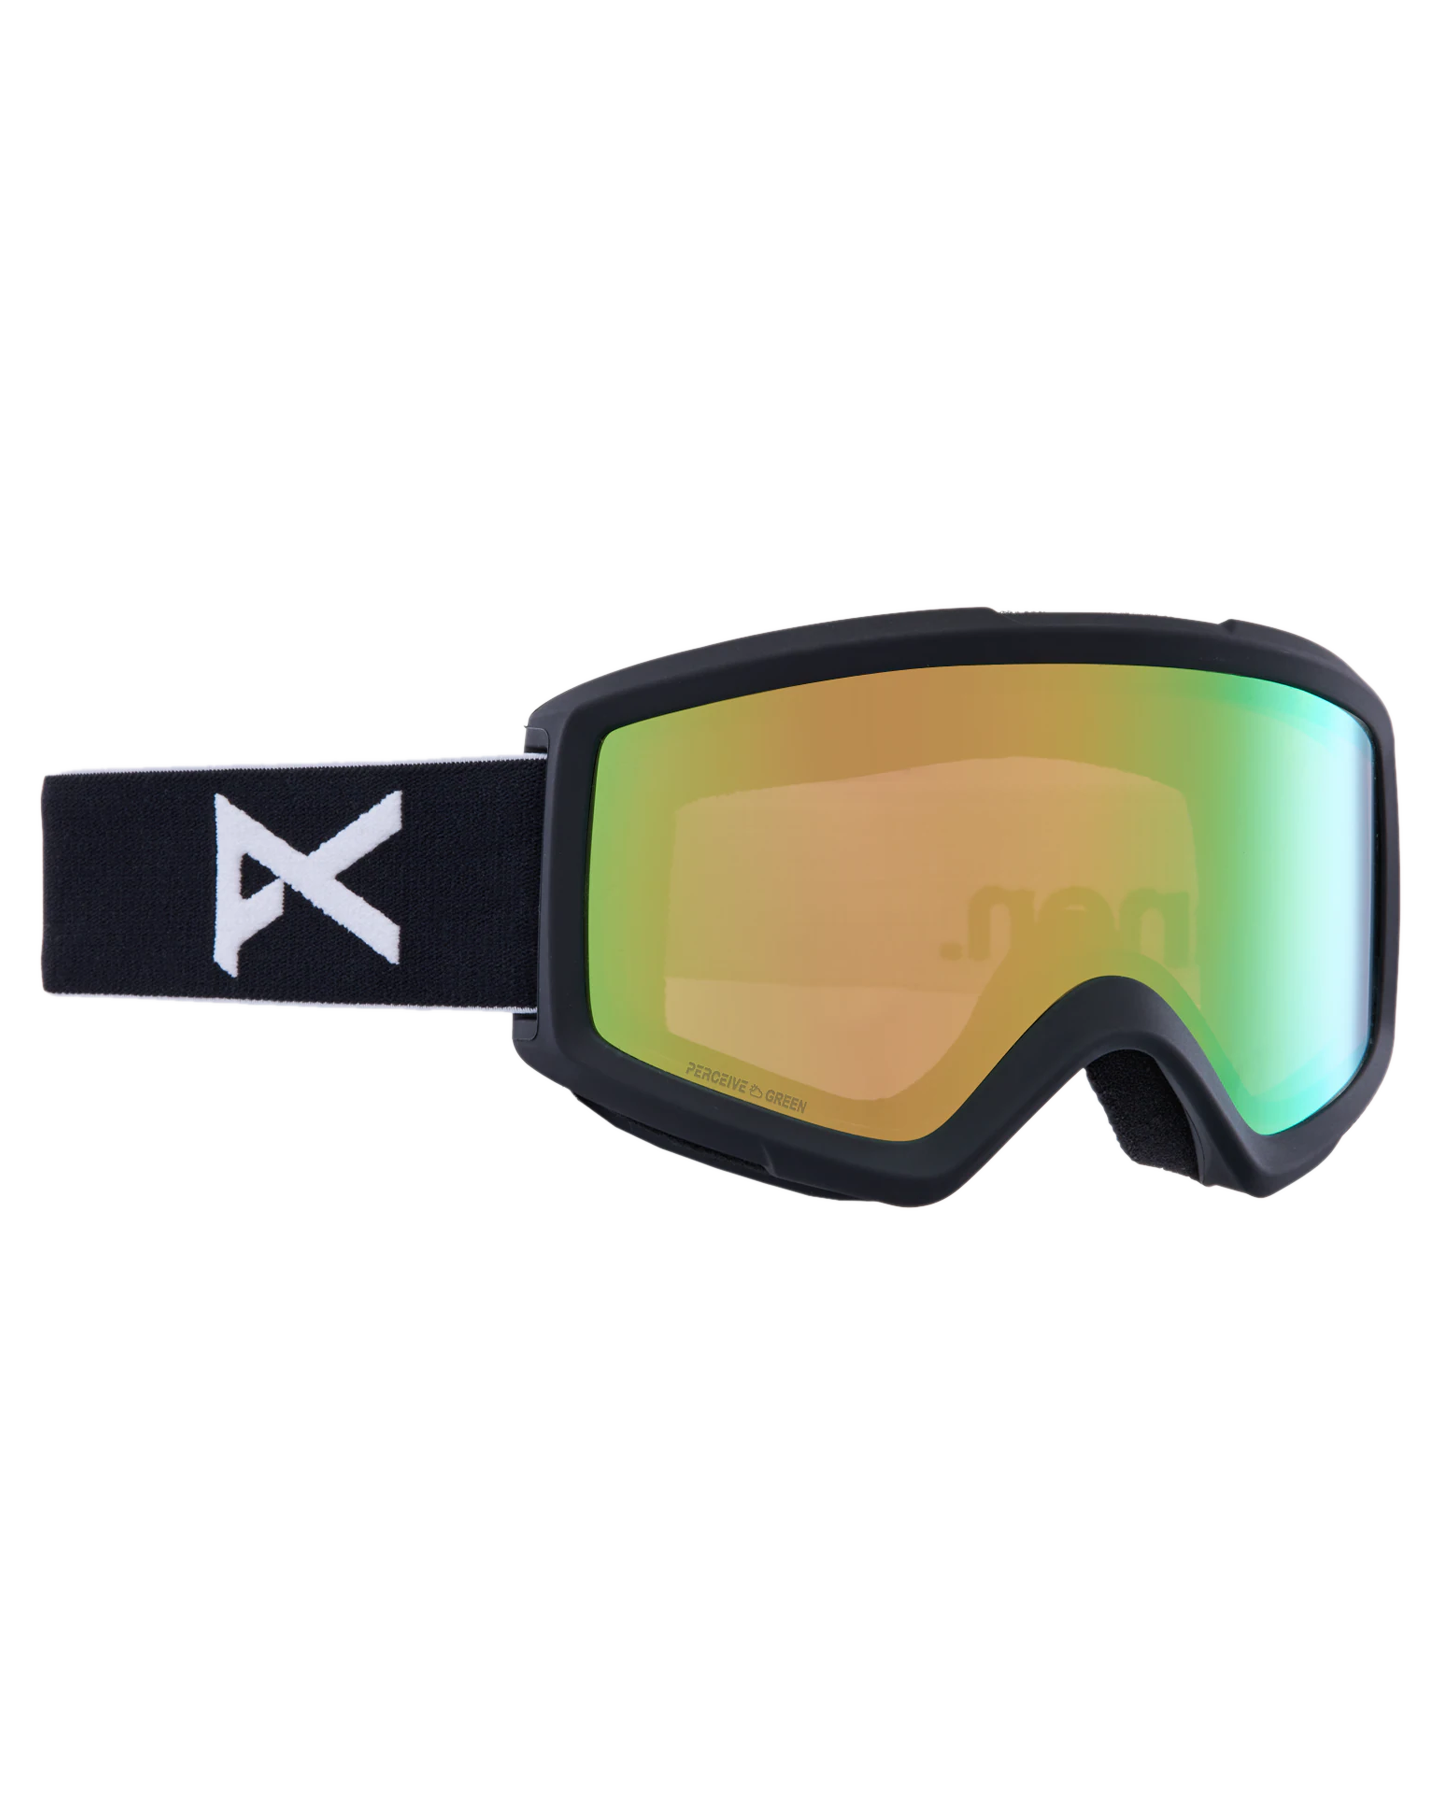 Anon Helix 2.0 Snow Goggles + Bonus Lens - Black/Perceive Variable Green Lens Snow Goggles - Mens - Trojan Wake Ski Snow